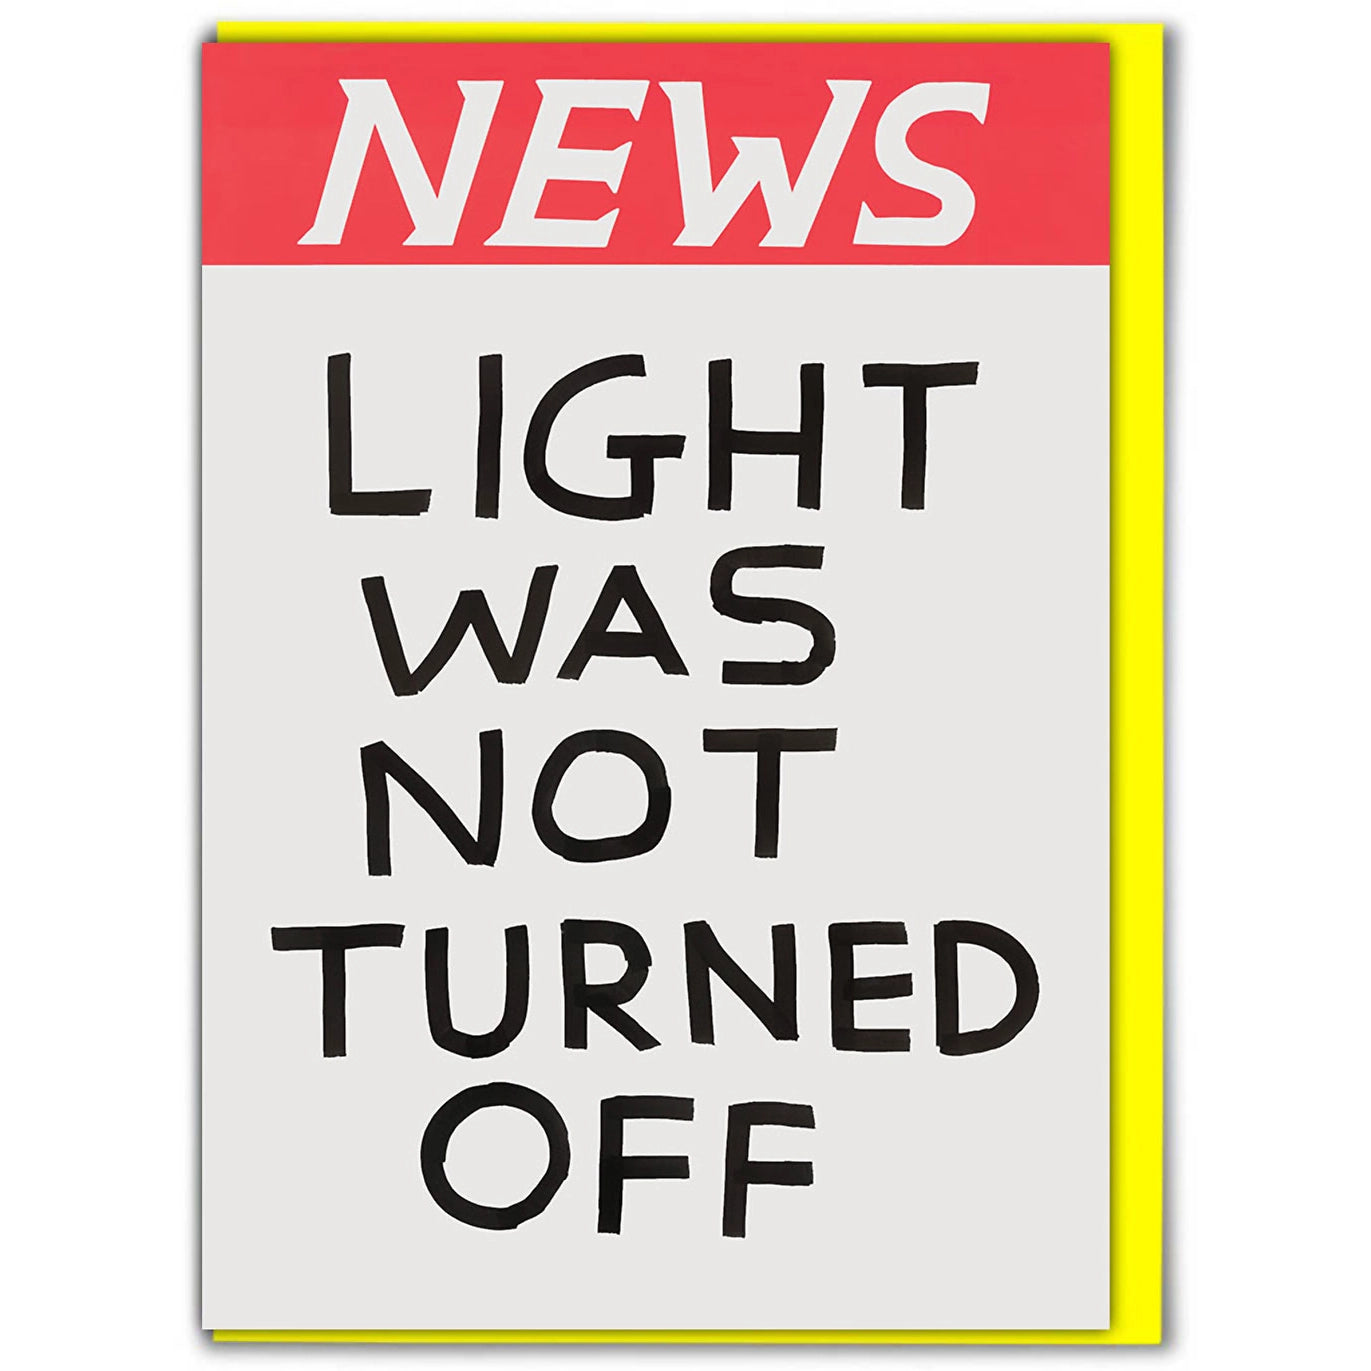 Light Not Turned Off card by David Shrigley